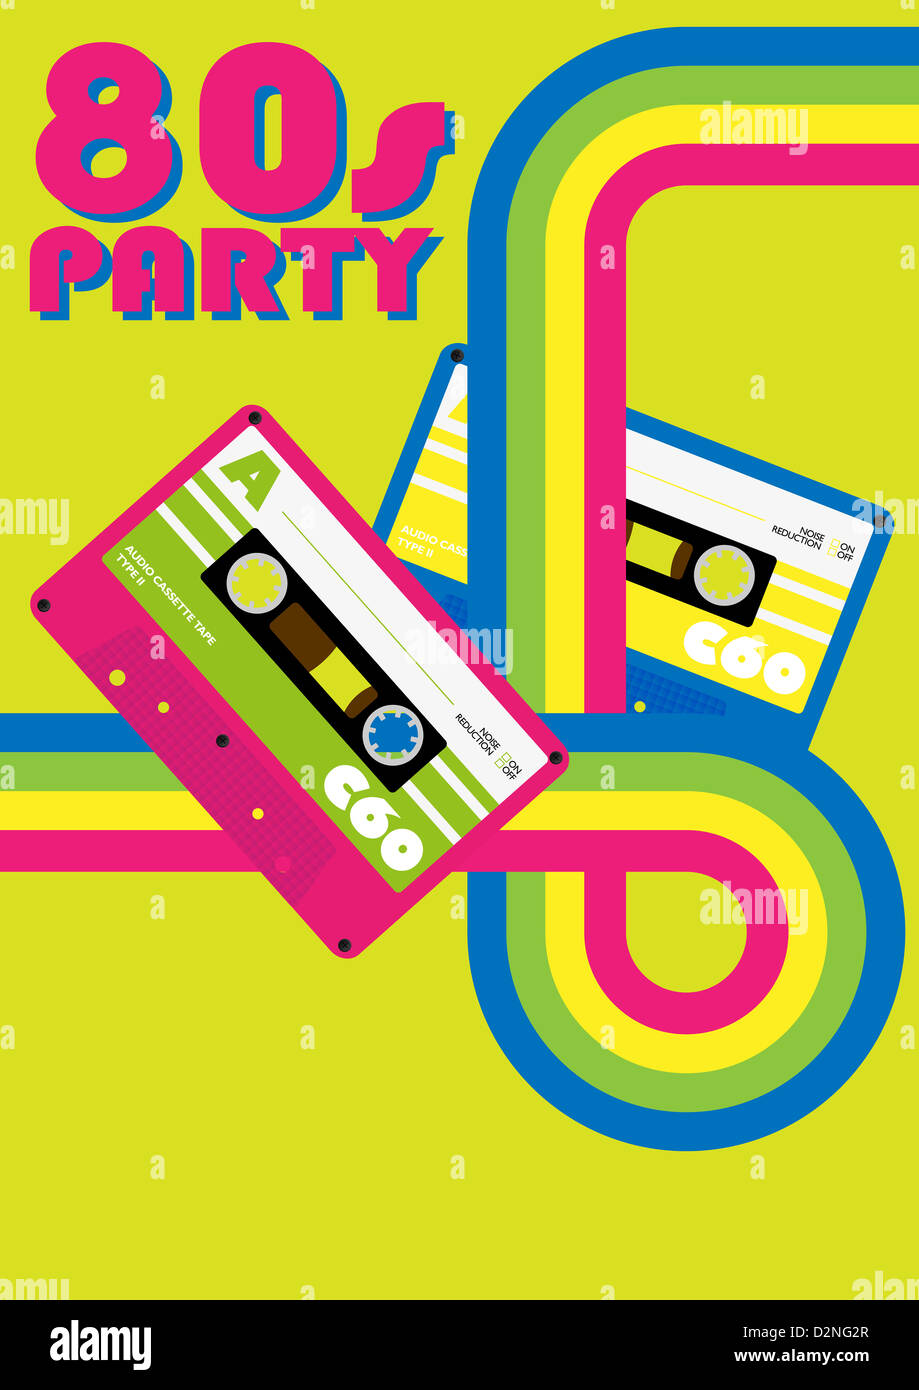 Aardrijkskunde Astrolabium Wapenstilstand Retro Poster - 80s Party Flyer With Audio Cassette Tapes Stock Photo - Alamy